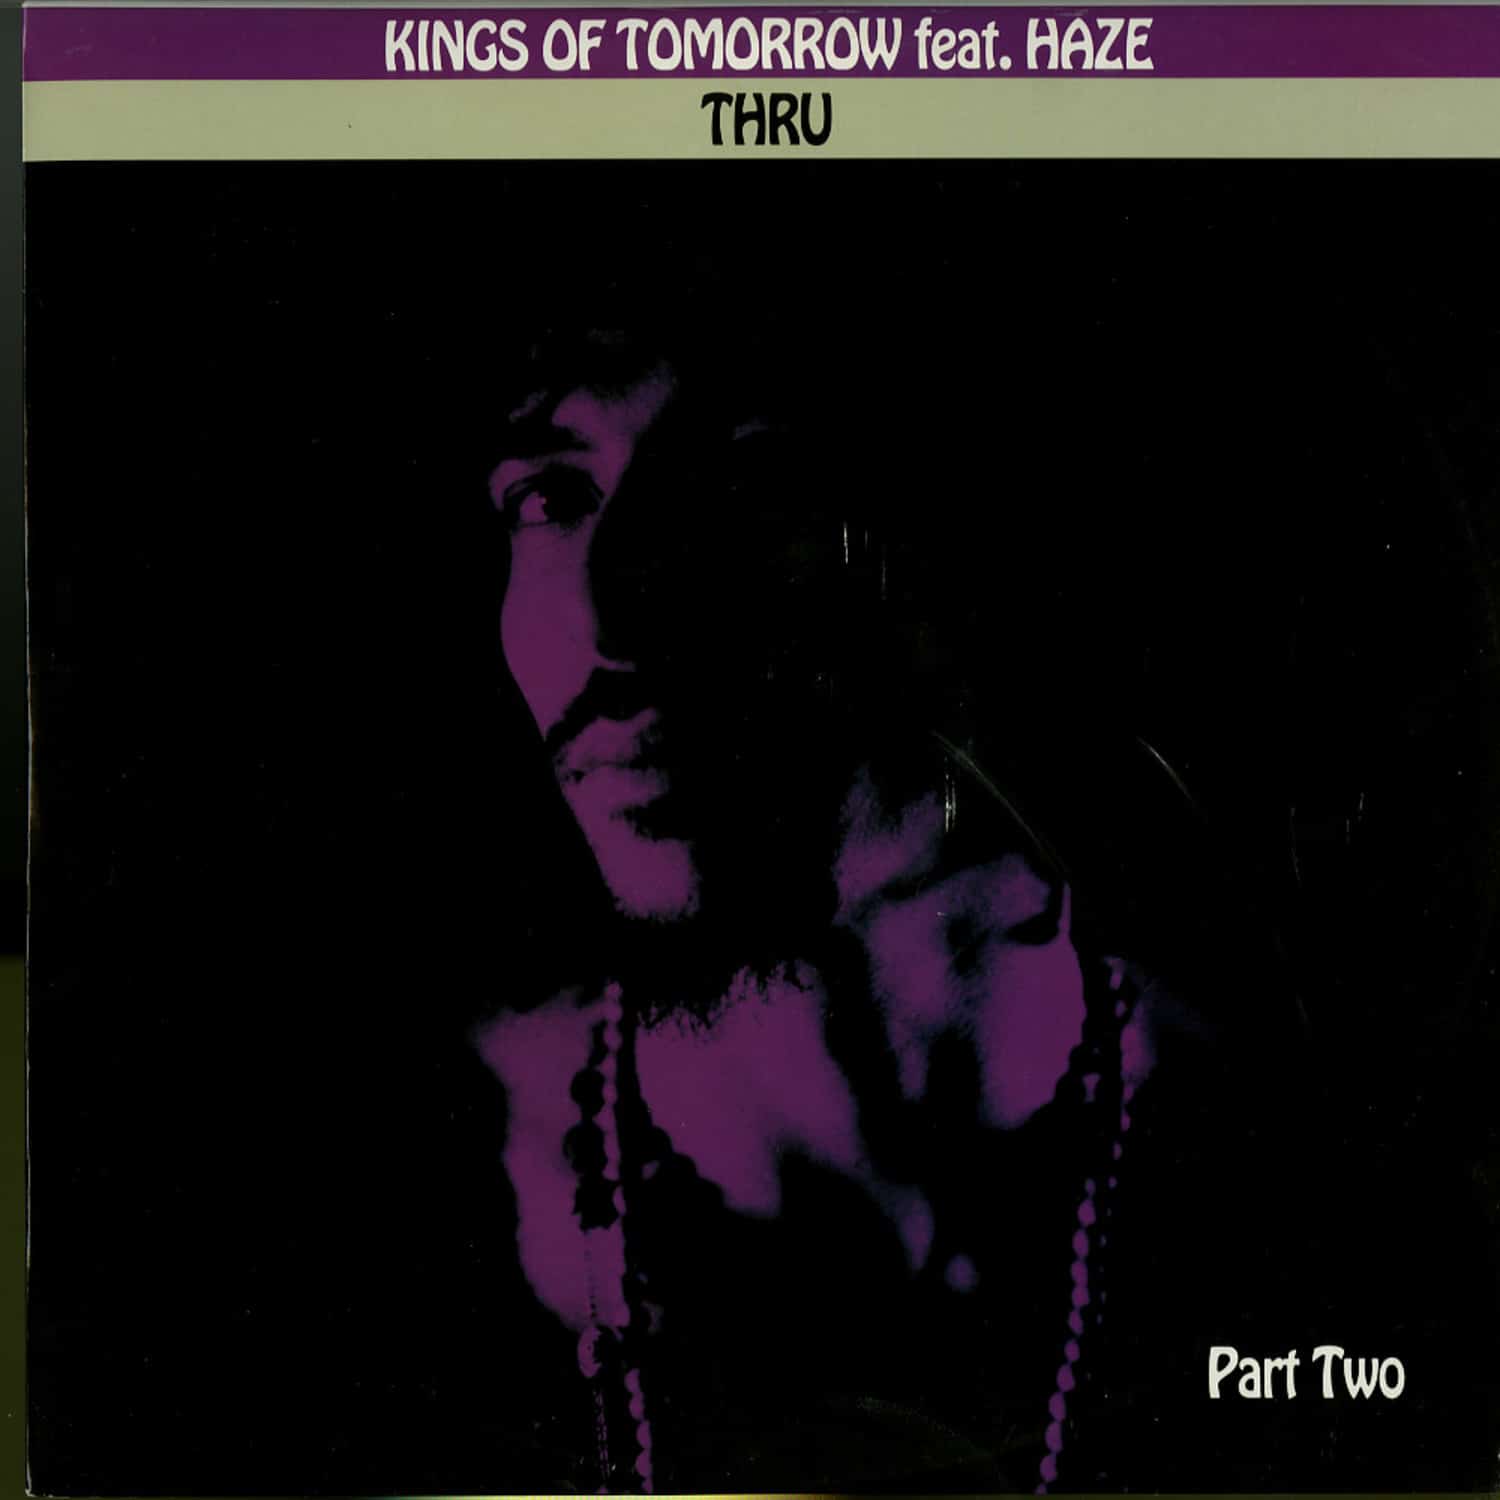 Kings of Tomorrow ft. Haze - THRU - PART TWO